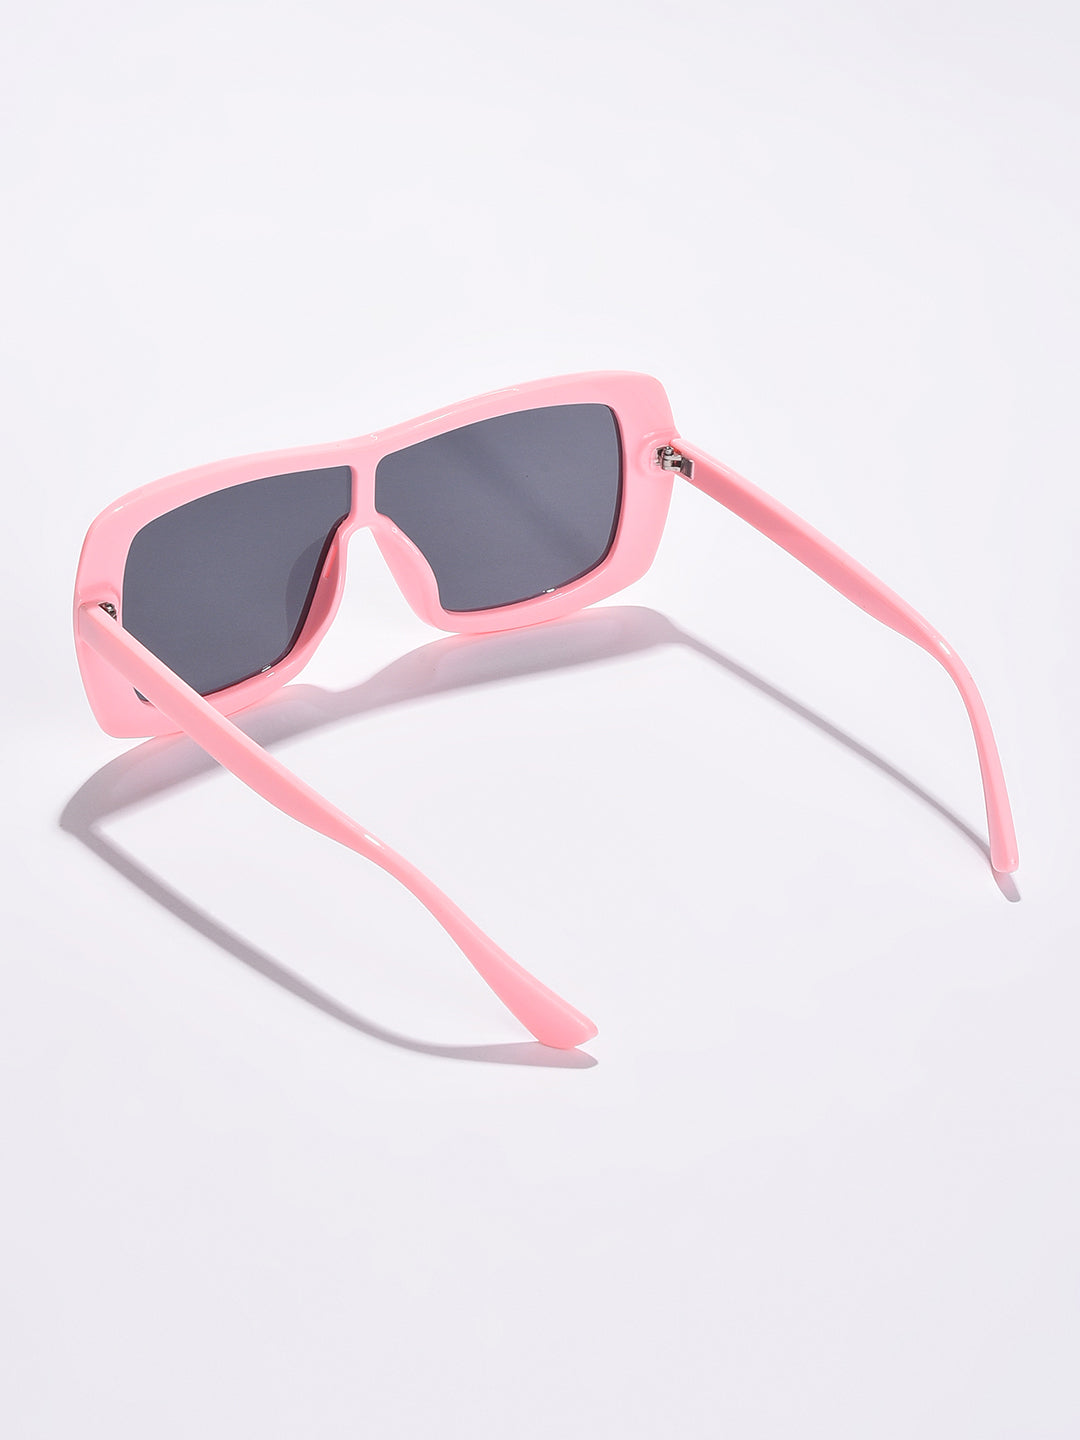 Black Lens Pink Wayfarer Sunglasses